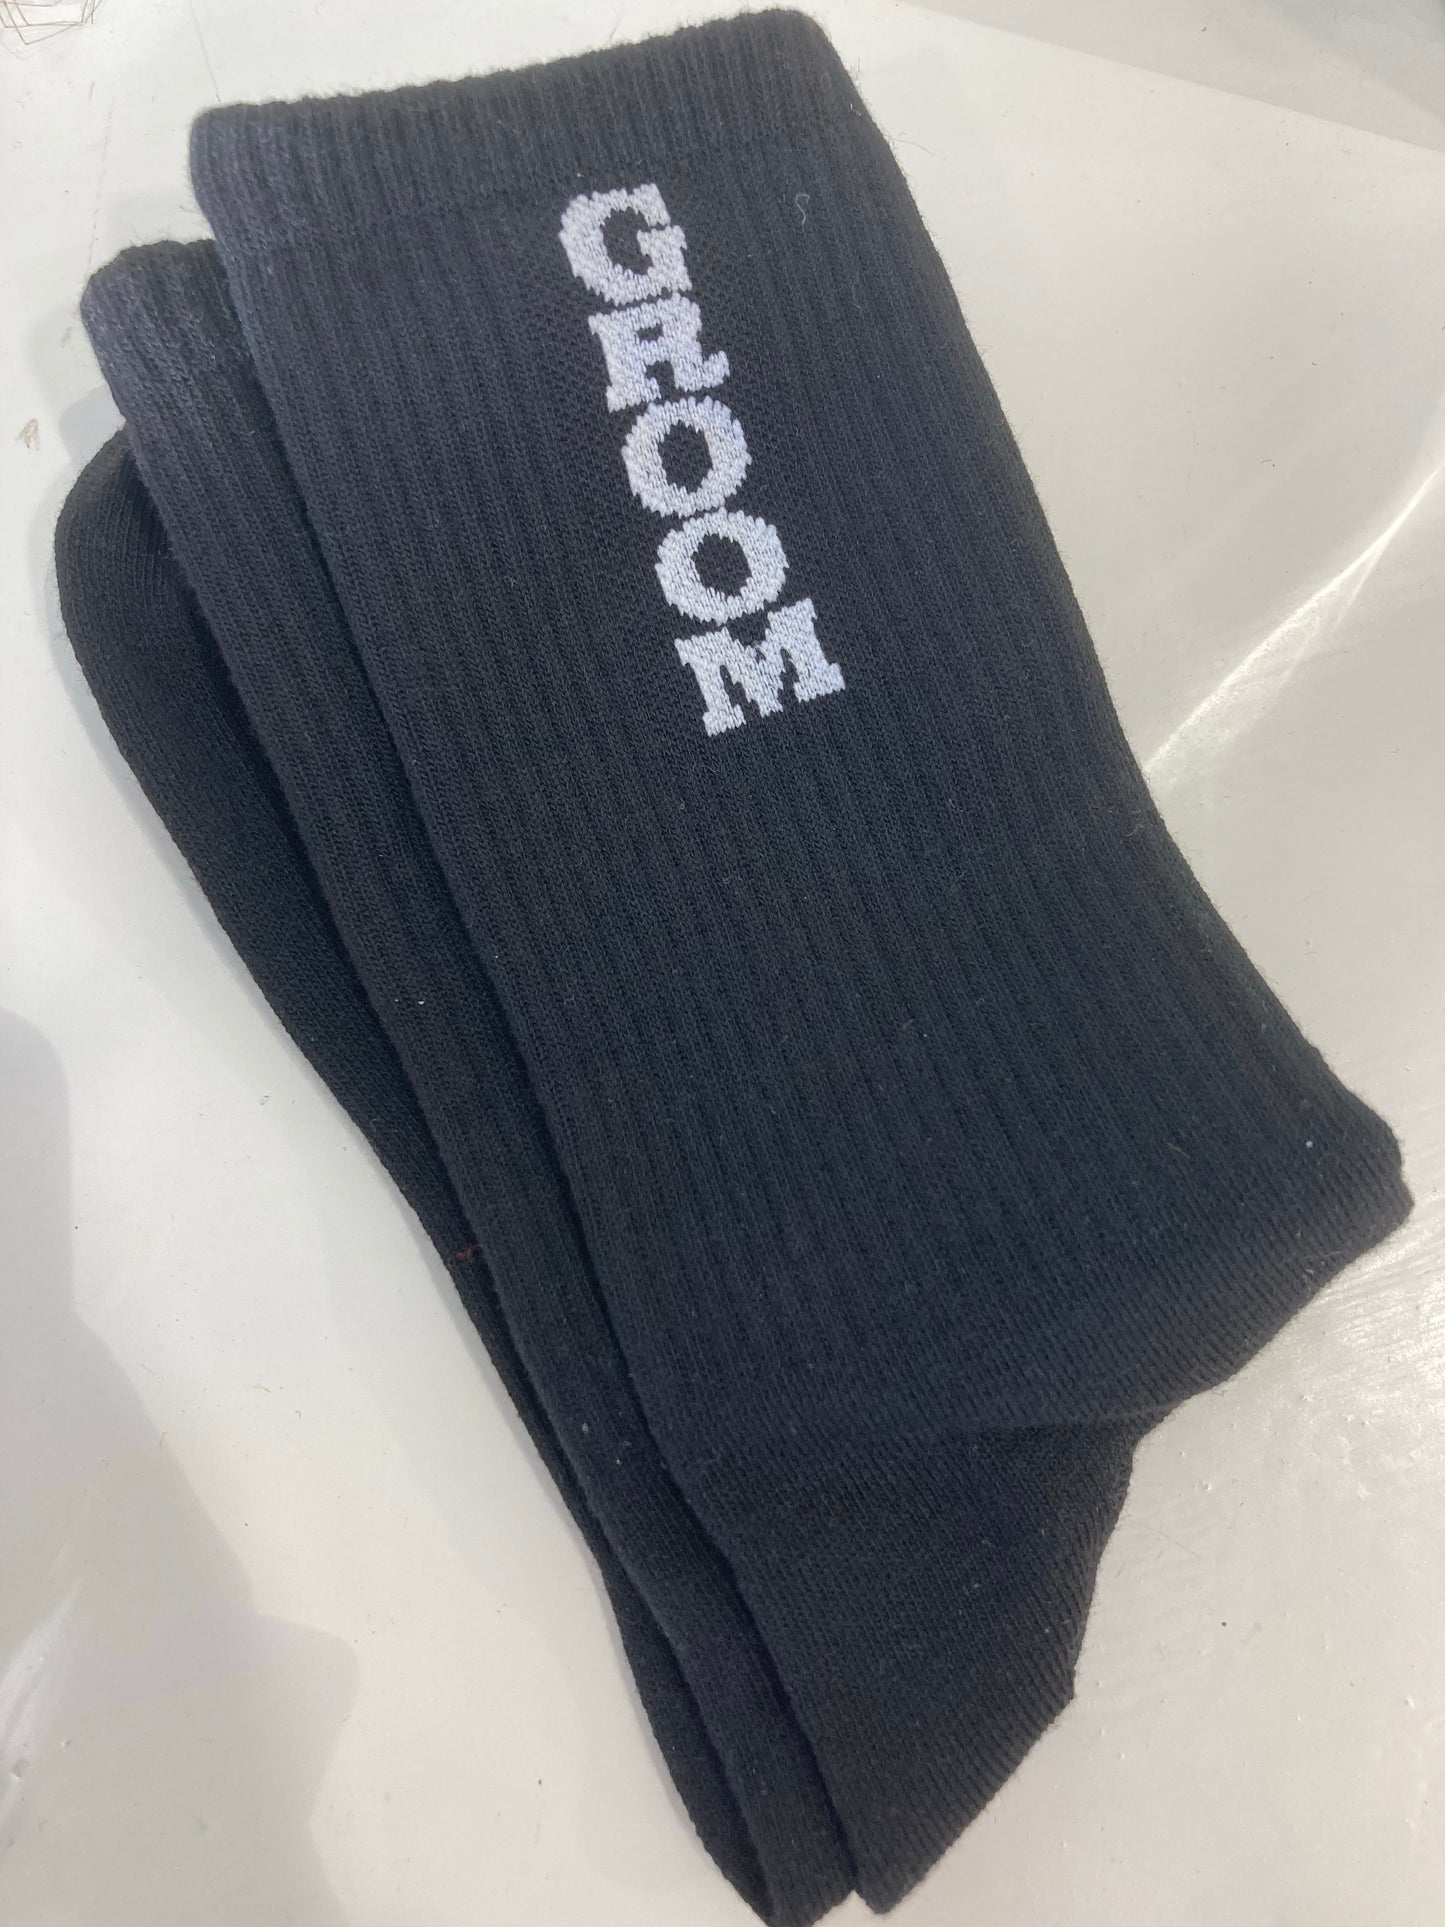 Groom socks